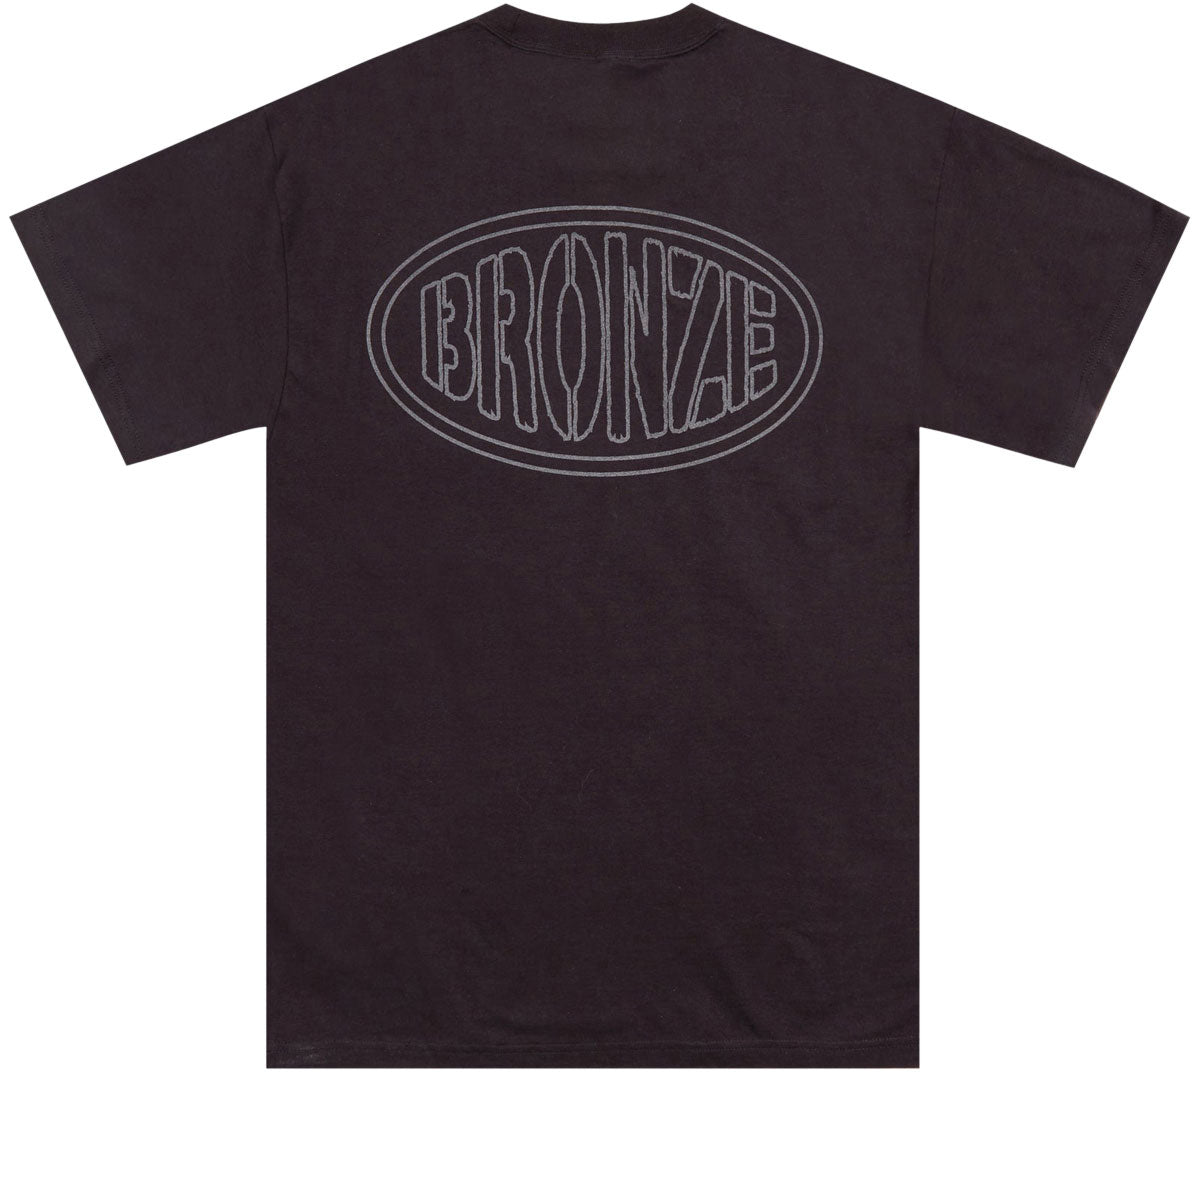 Bronze 56k Reflective Oval Pocket T-Shirt - Black image 2